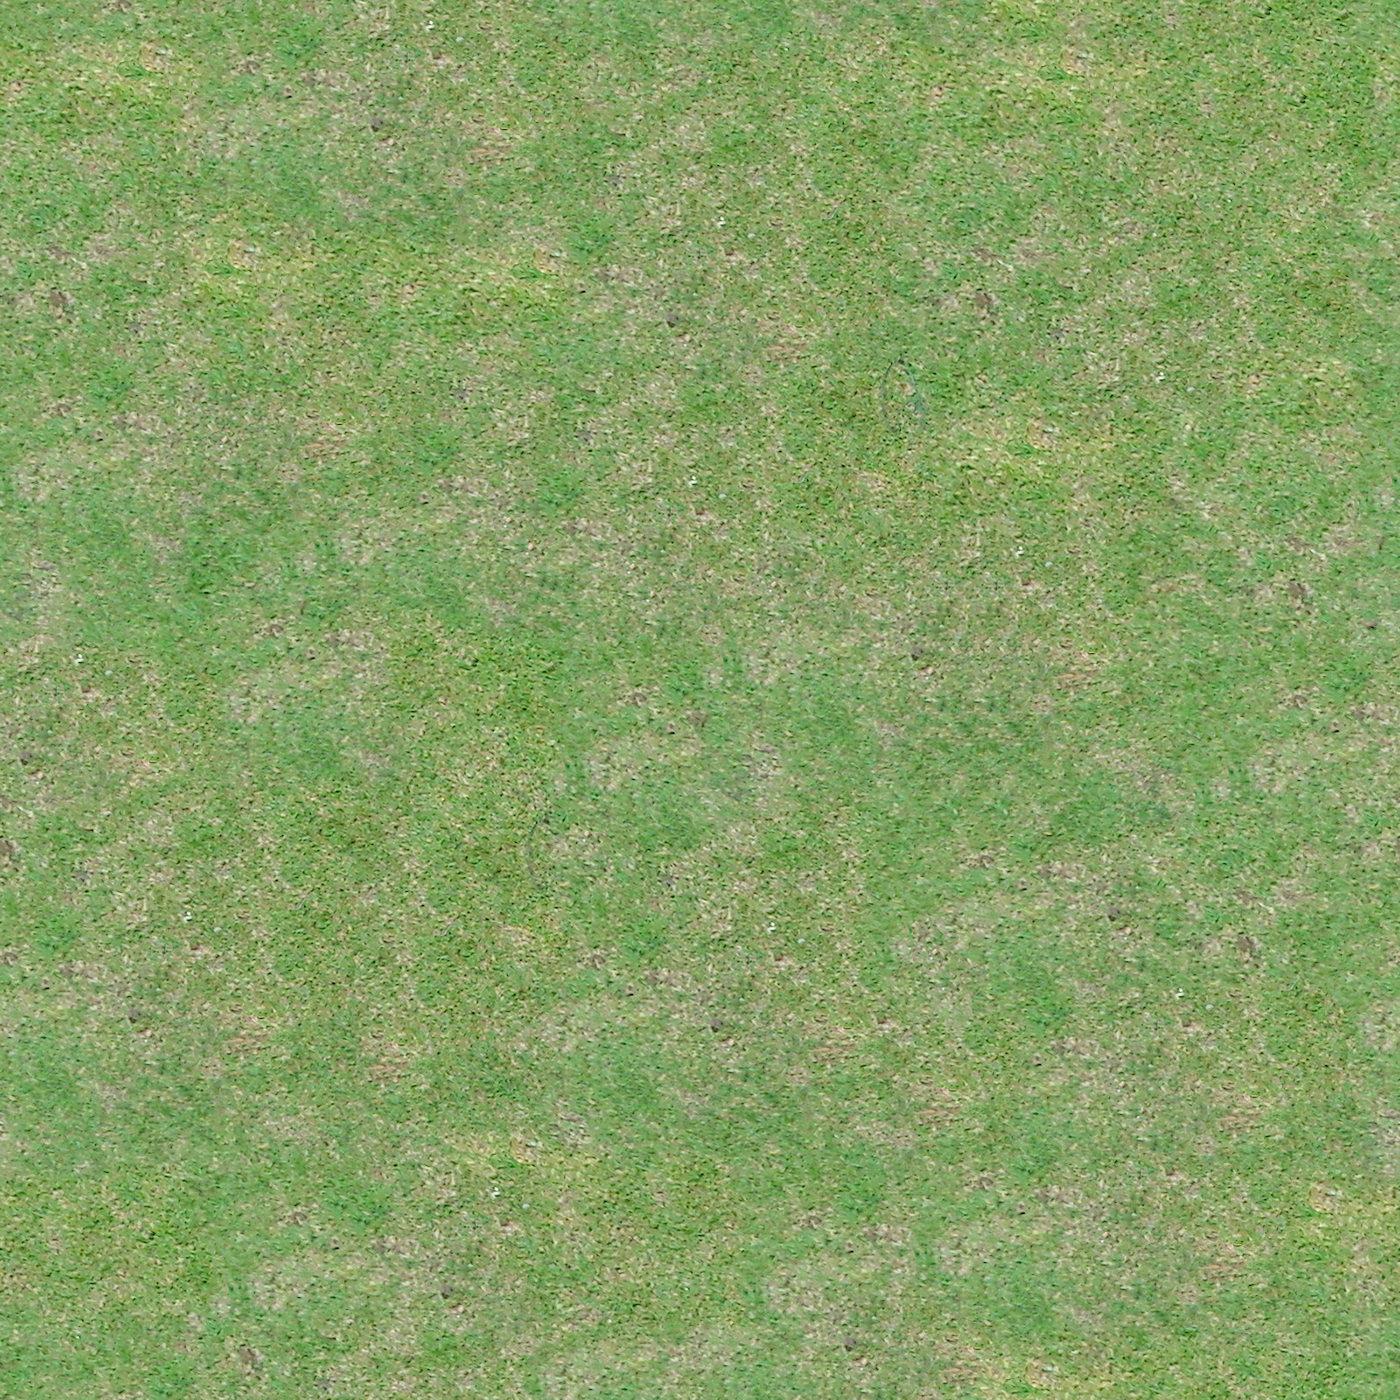 grass texture seamless Seamless texture grass textures lawn field wild ...